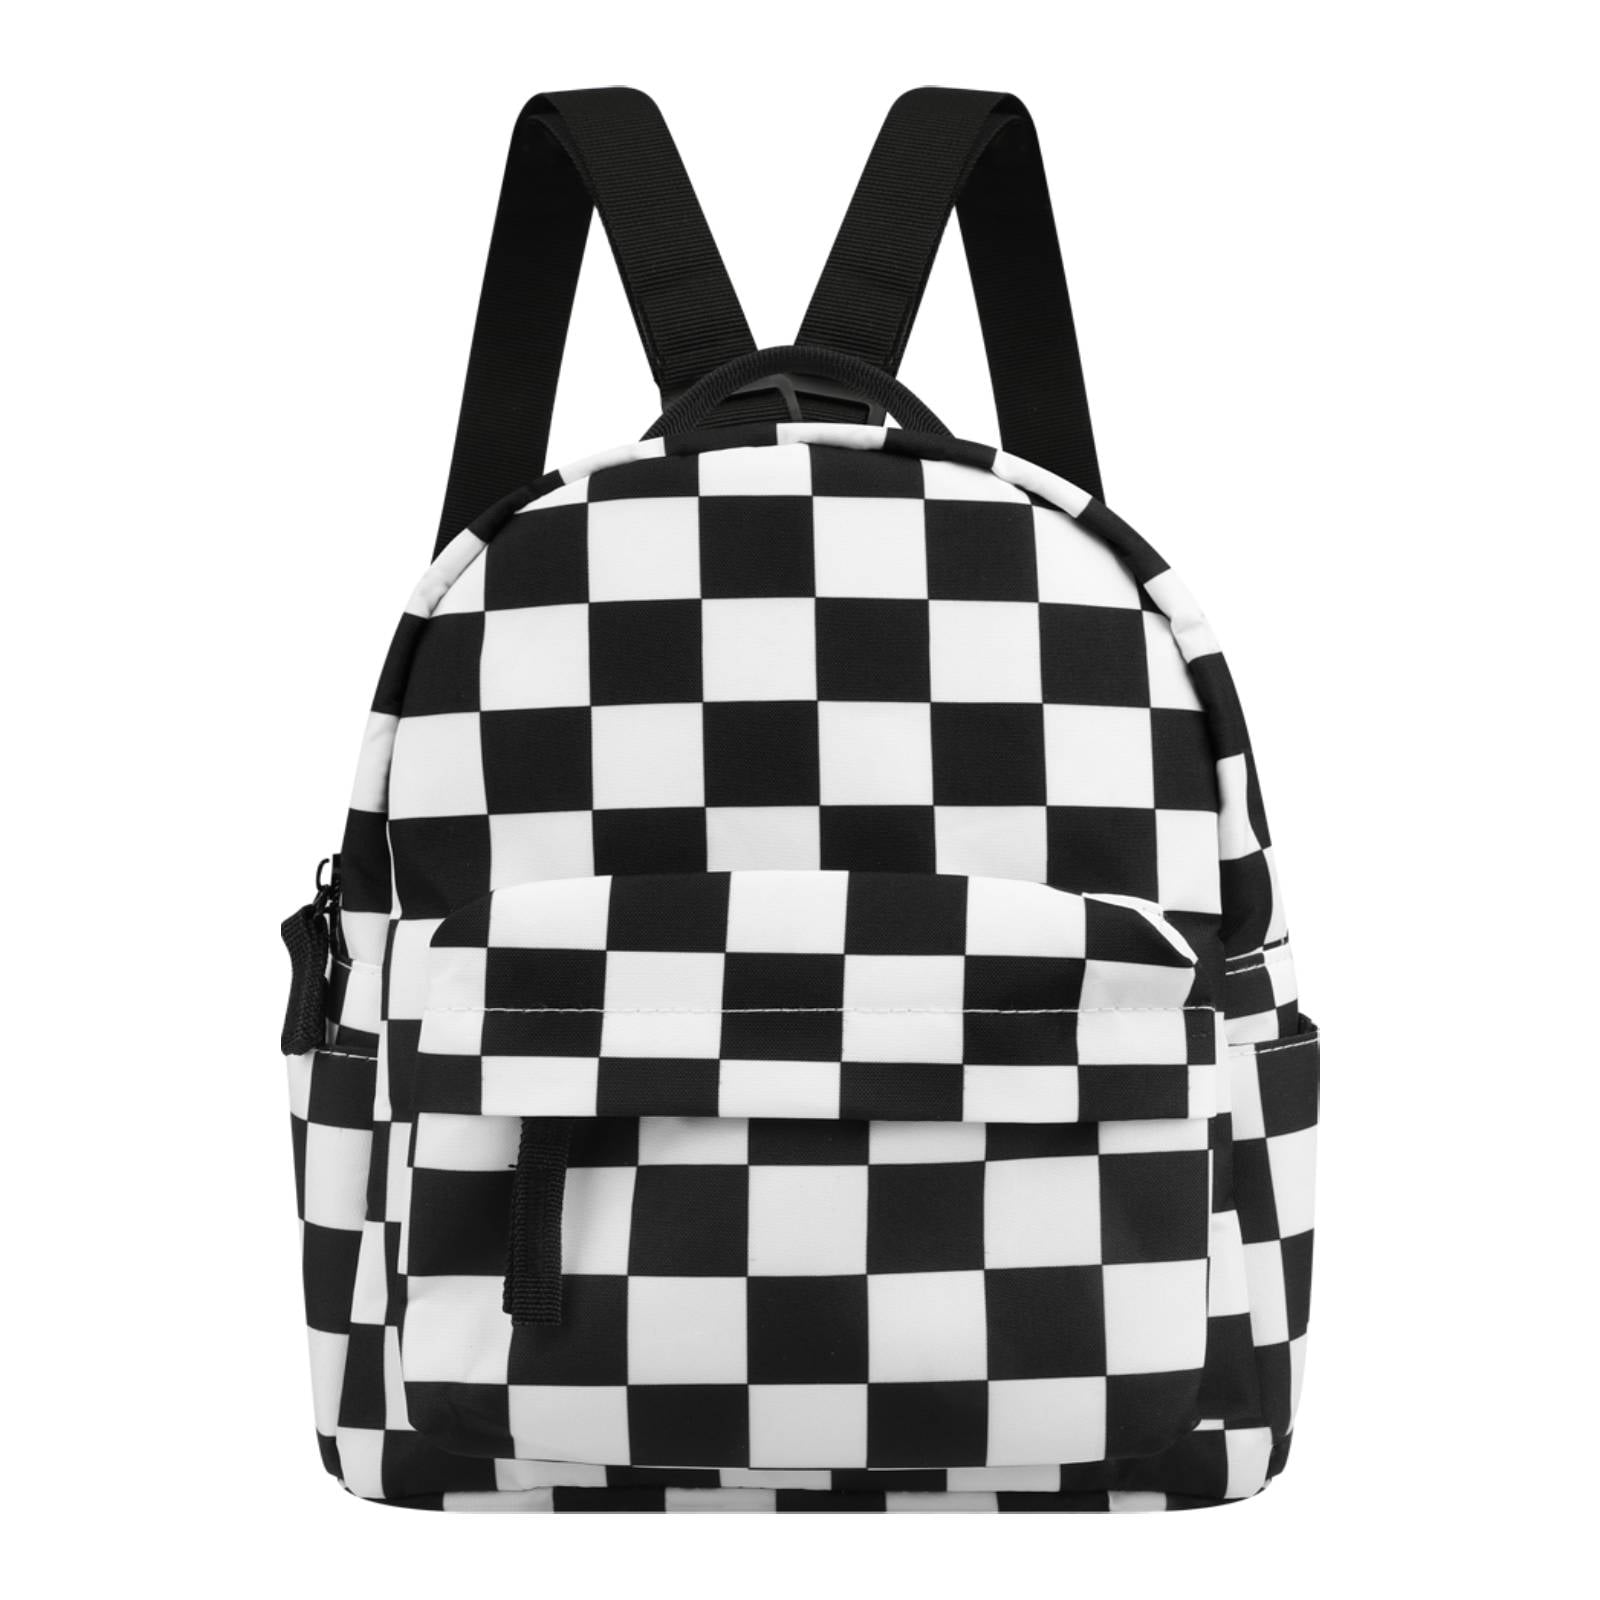 Mini Backpack for Women Girls, EEEkit Black White Checkered Bag, Small Travel Daypack for Teens and Kids, School Bookbag, Kids Unisex, Size: 26 x 4.72